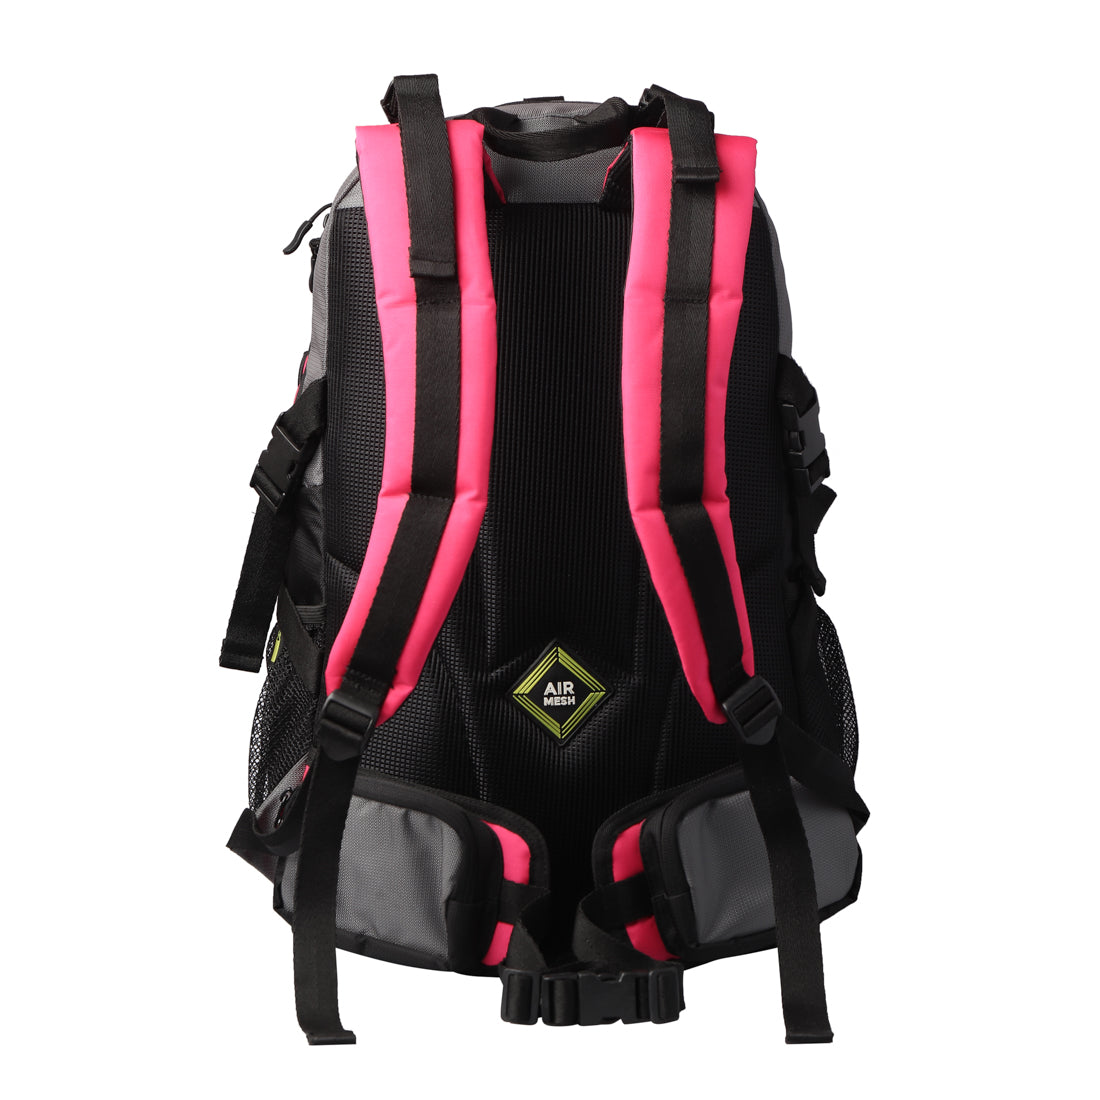 Mt. Adventure backpack